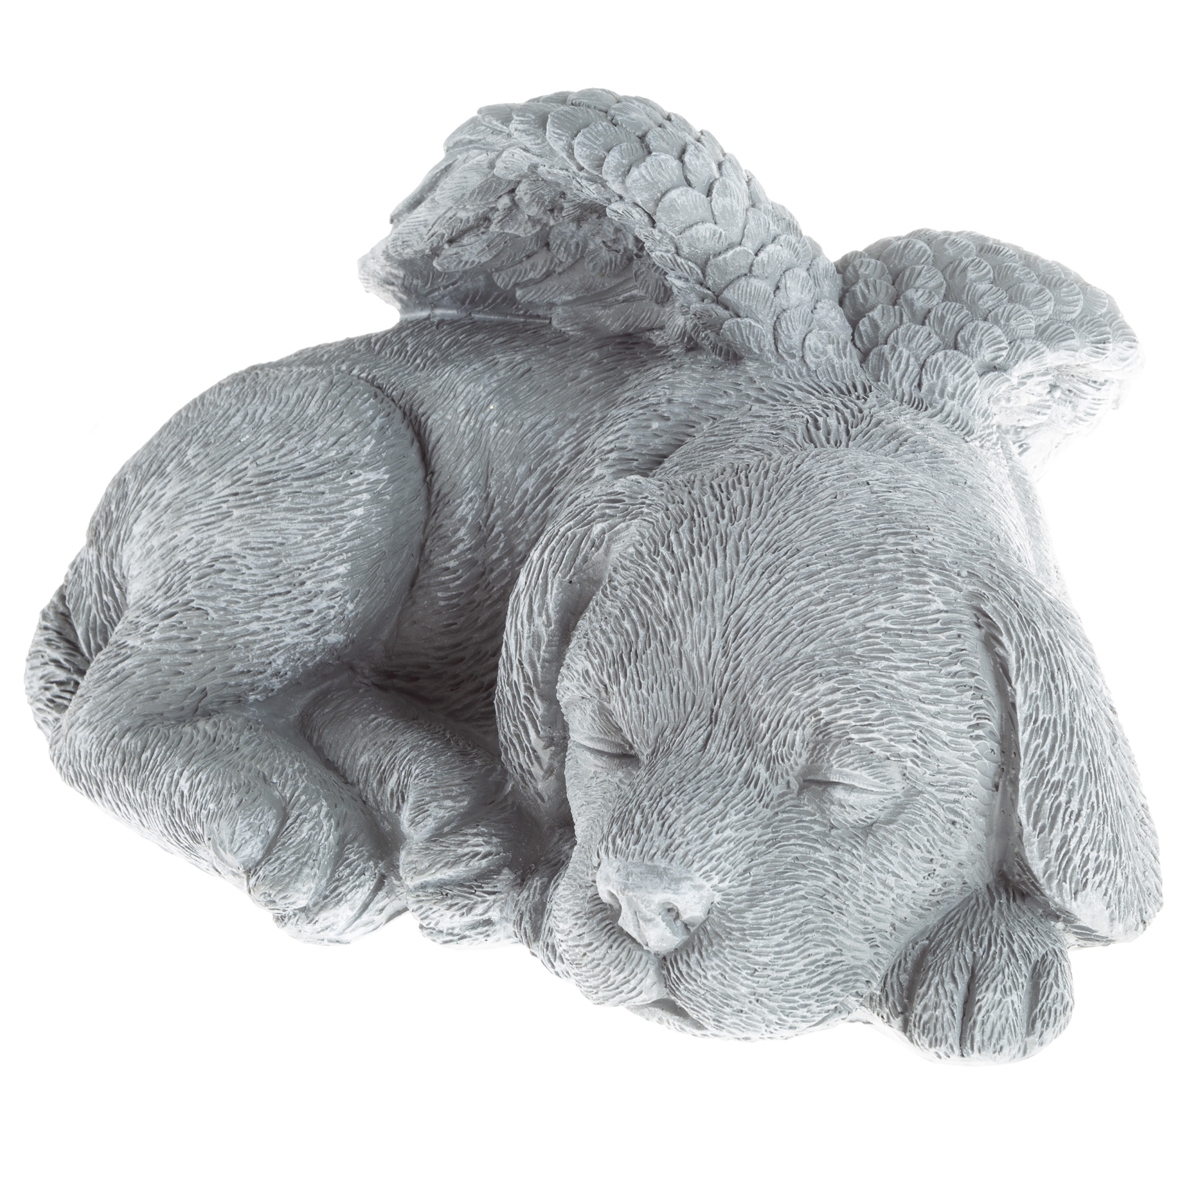 UPC 192664800642 product image for Dog Memorial Stone - Sleeping Angel Puppy Keepsake Sculpture - Resin Grave Marke | upcitemdb.com